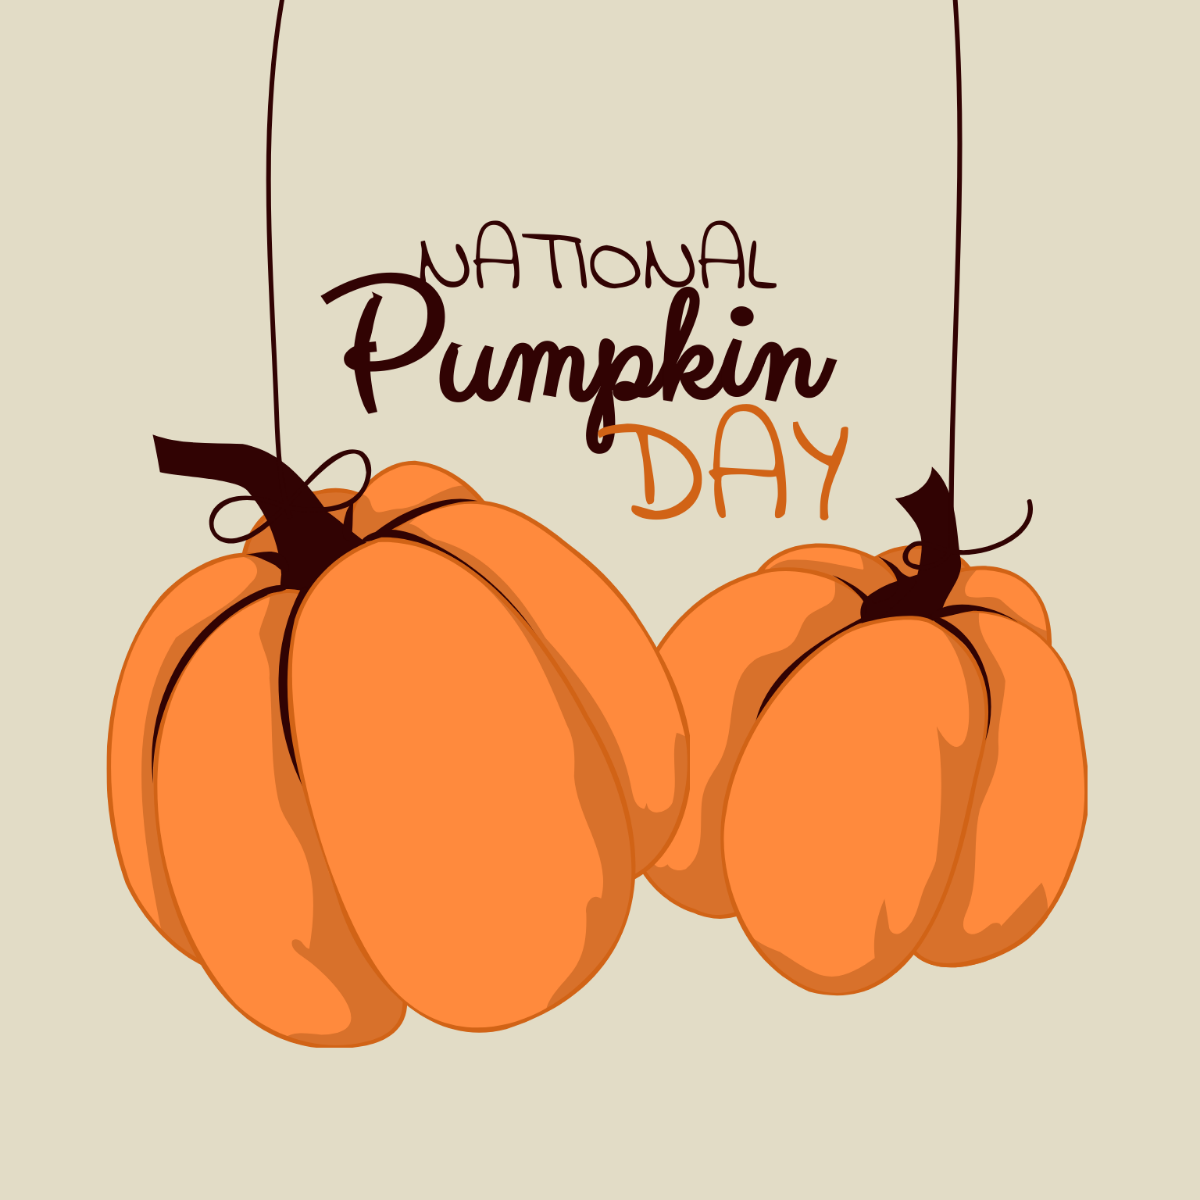 Free National Pumpkin Day Vector Template